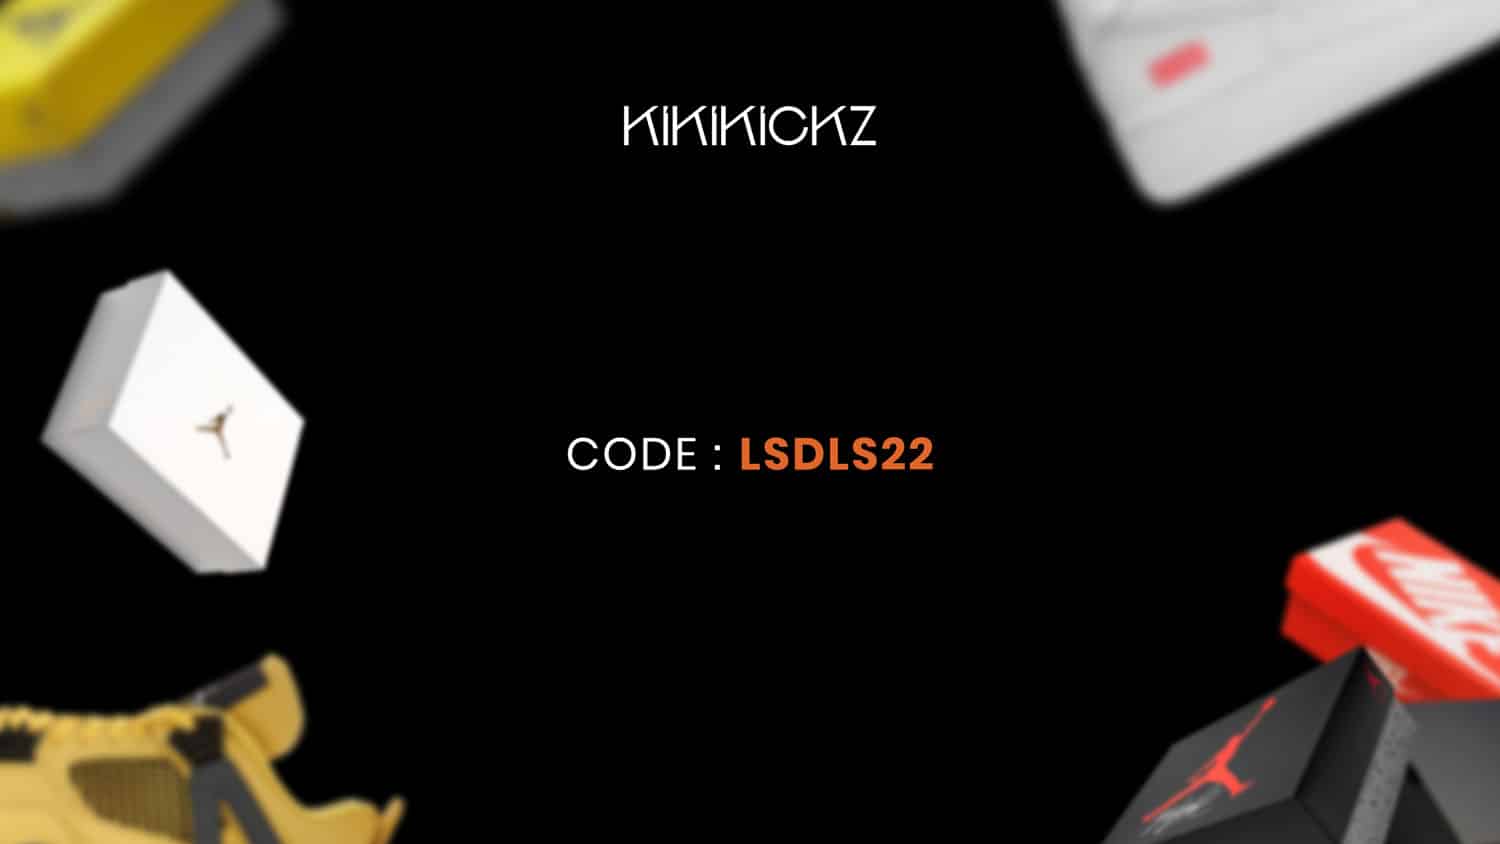 Code Promo Kikikickz 2022